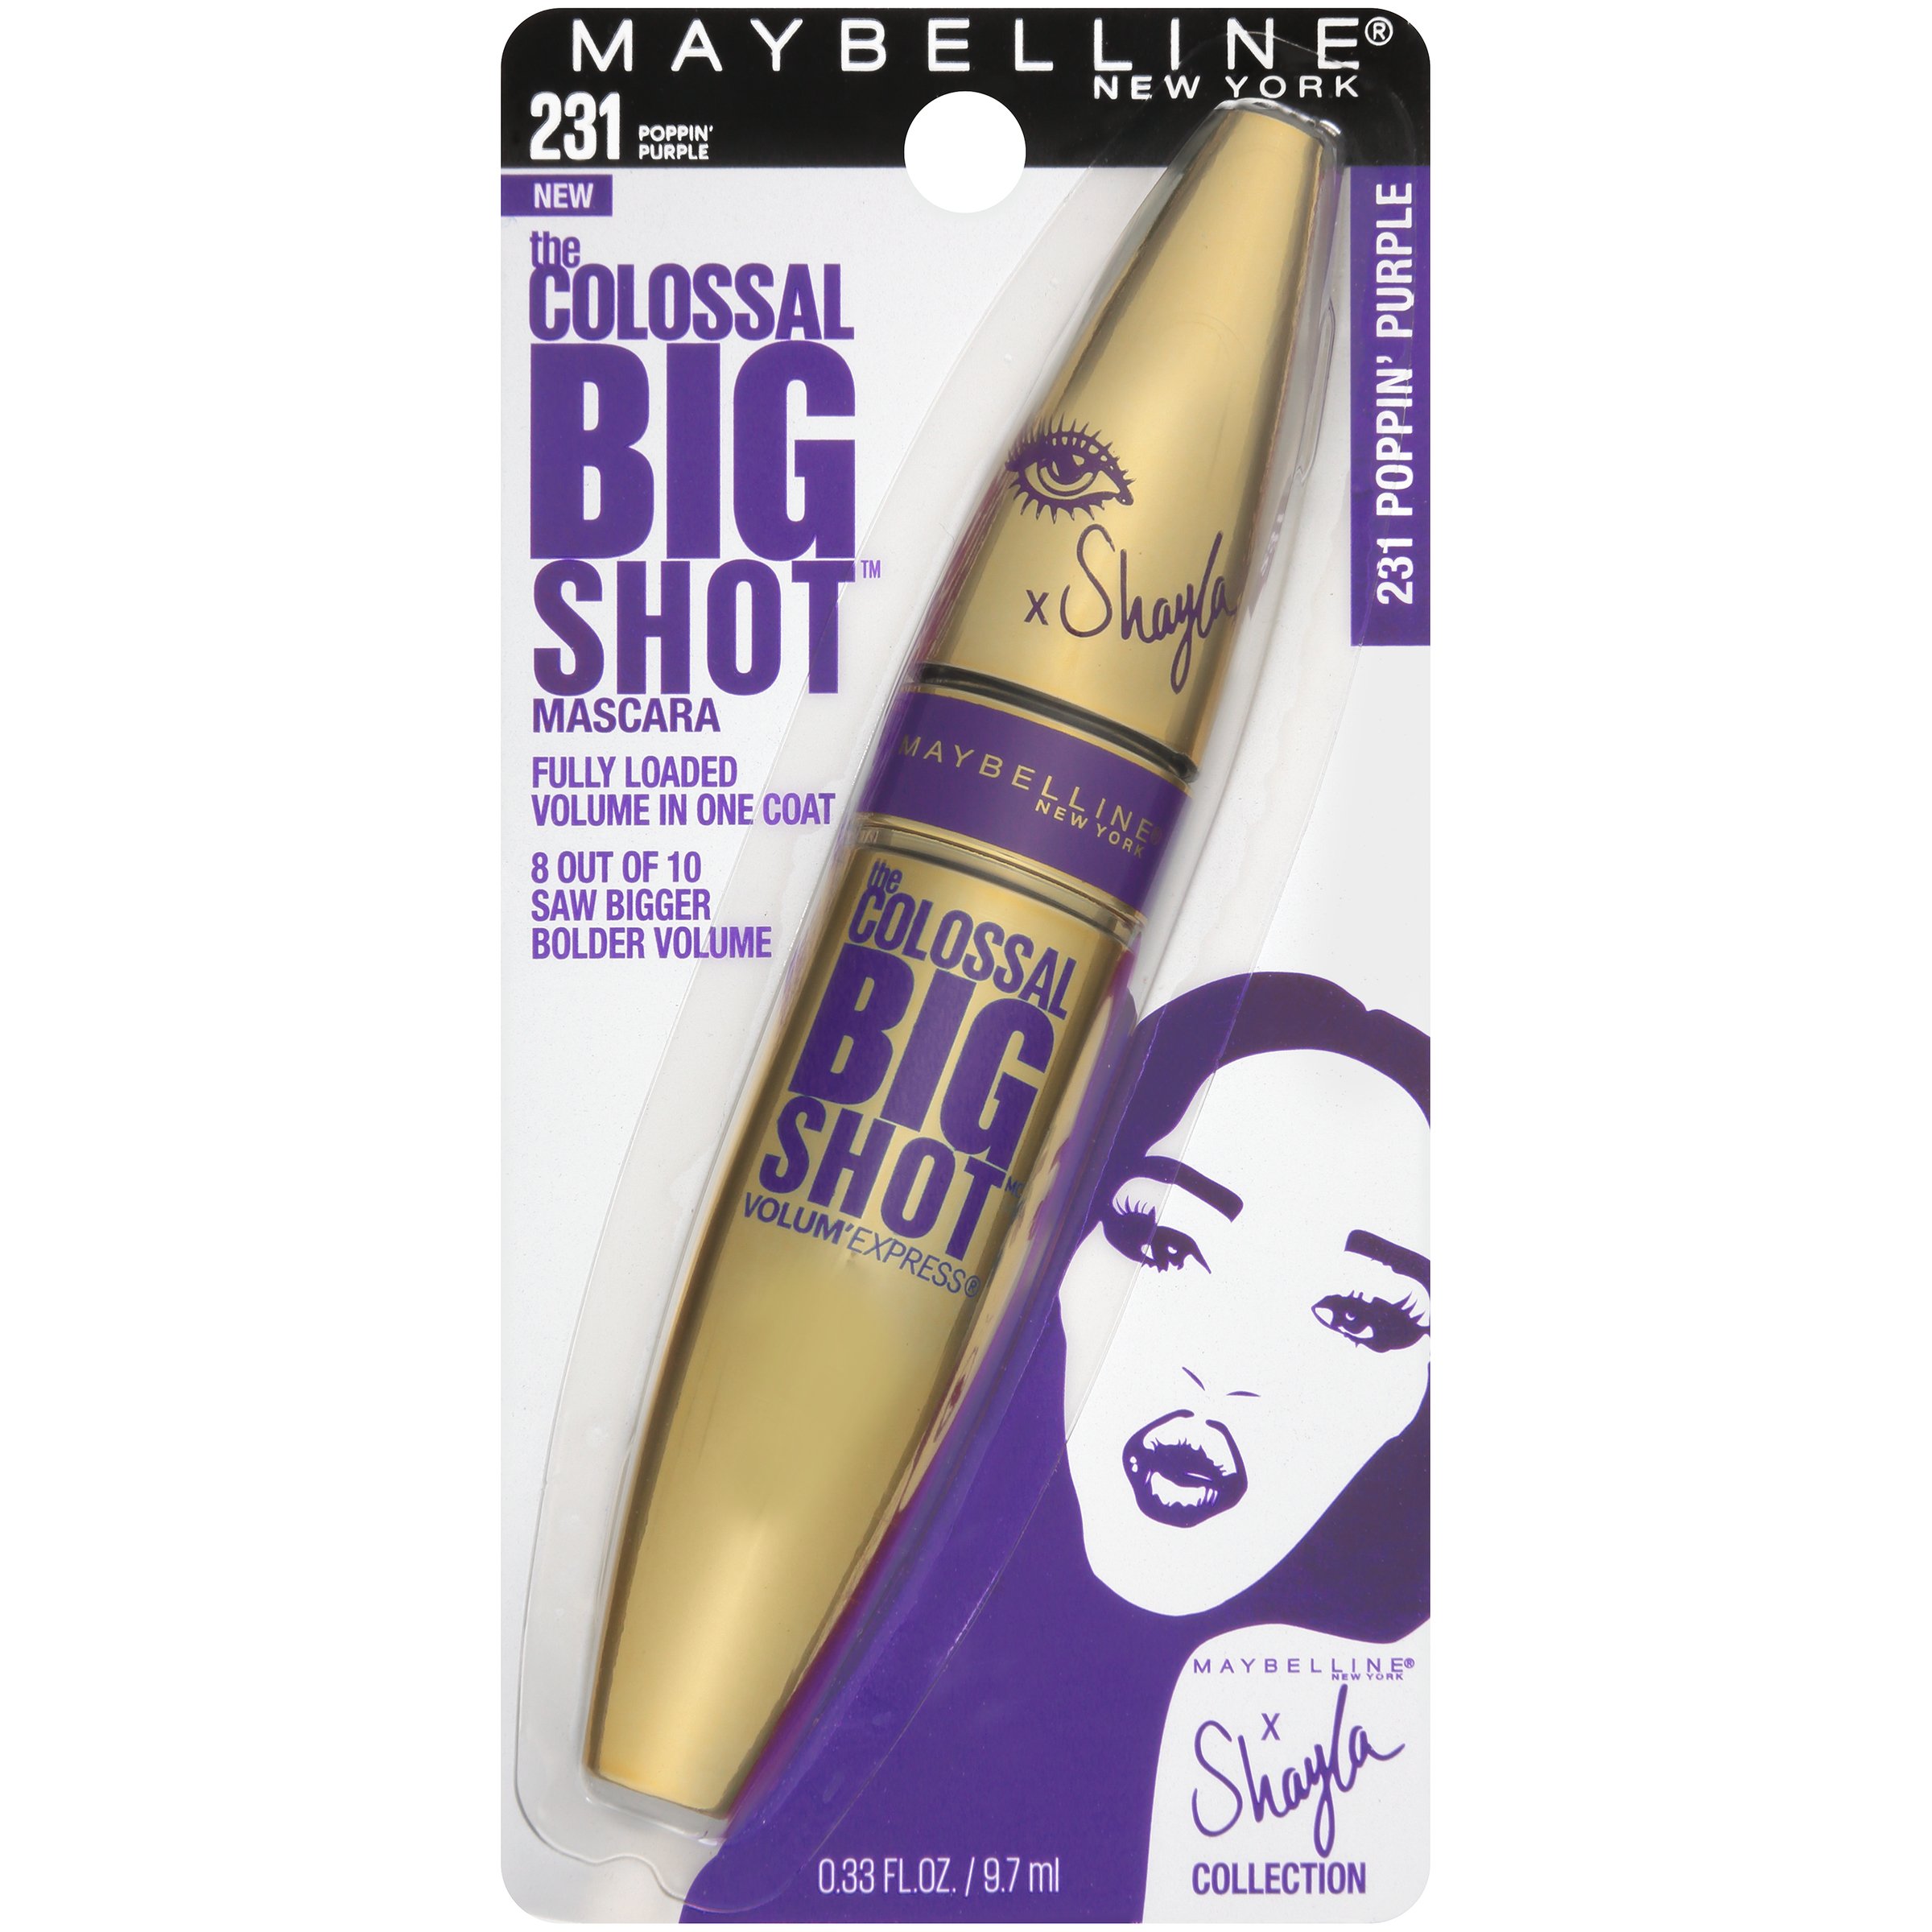 Mascara Shop Express Shot - x Poppin\' Mascara at Purple The Colossal Big Shayla, Volum\' Maybelline H-E-B